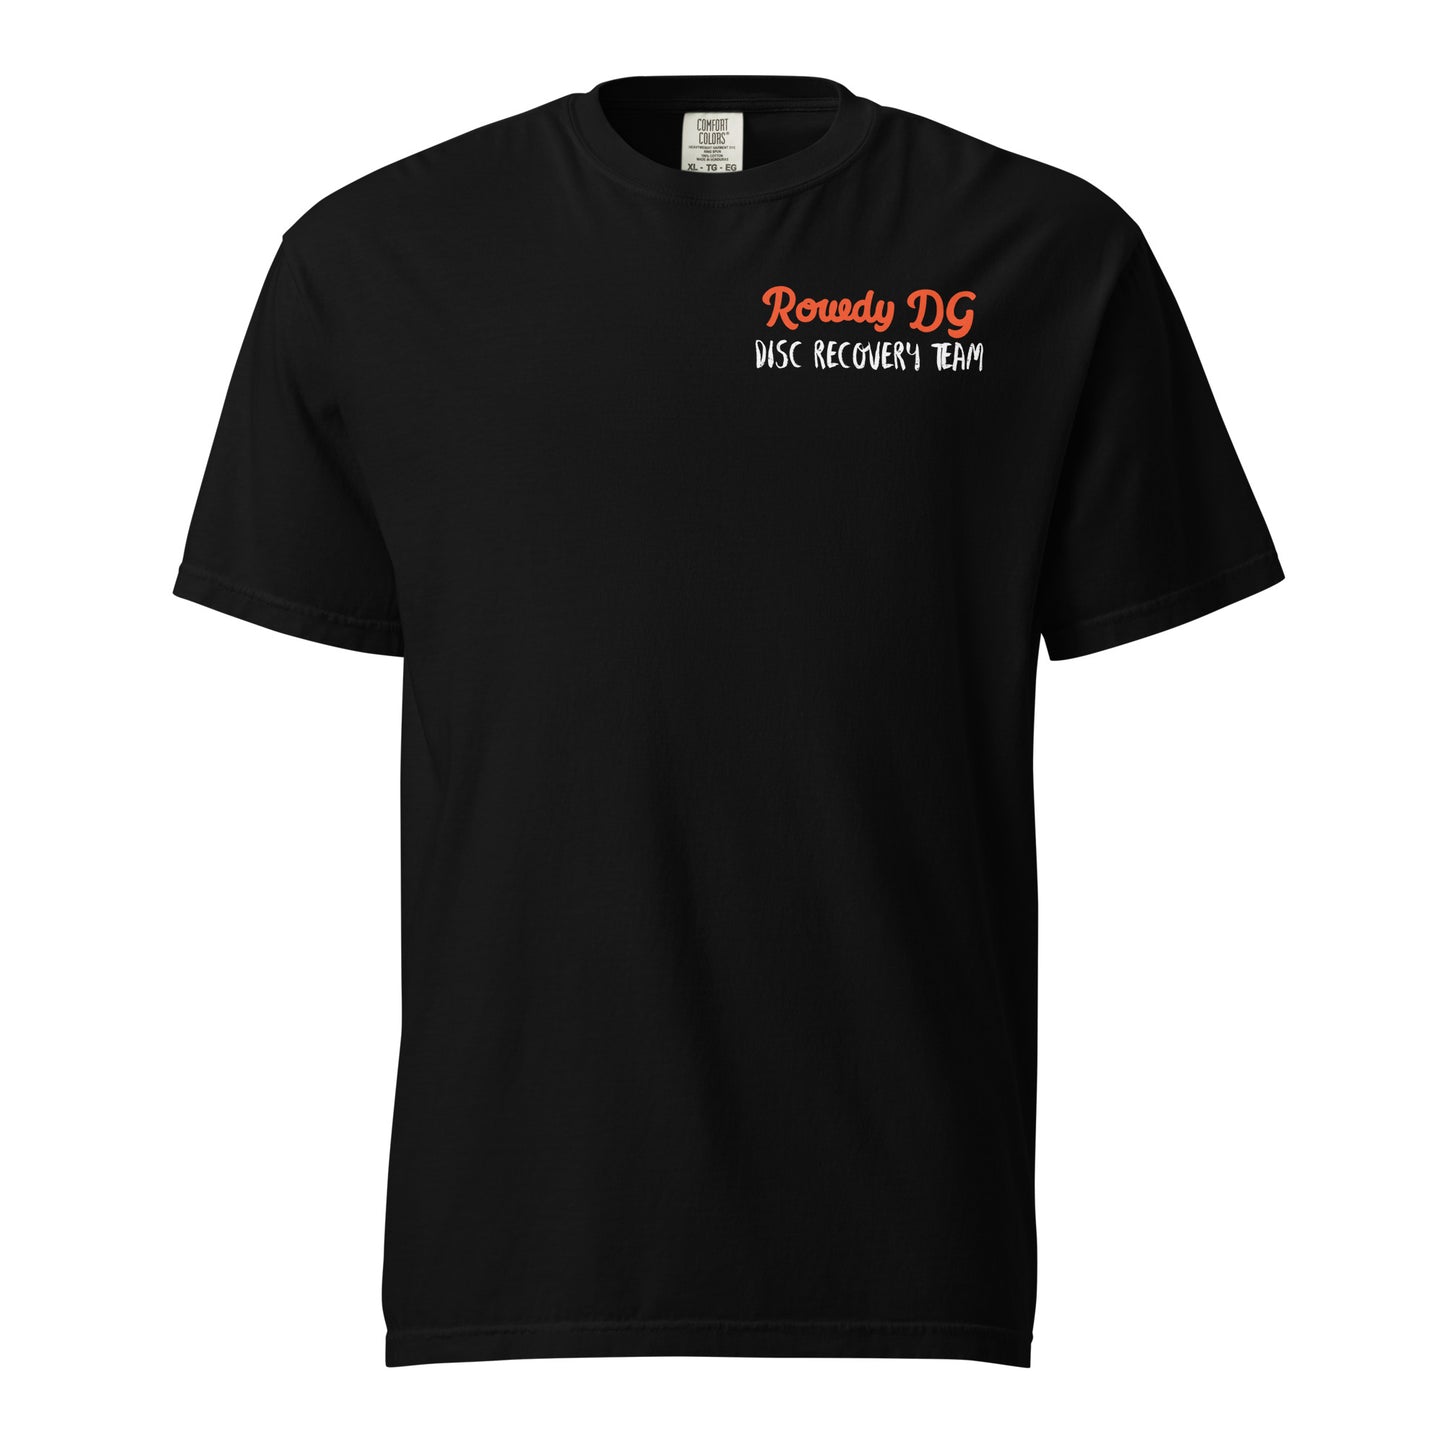 Disc Recovery Team RowdyDG T-shirt